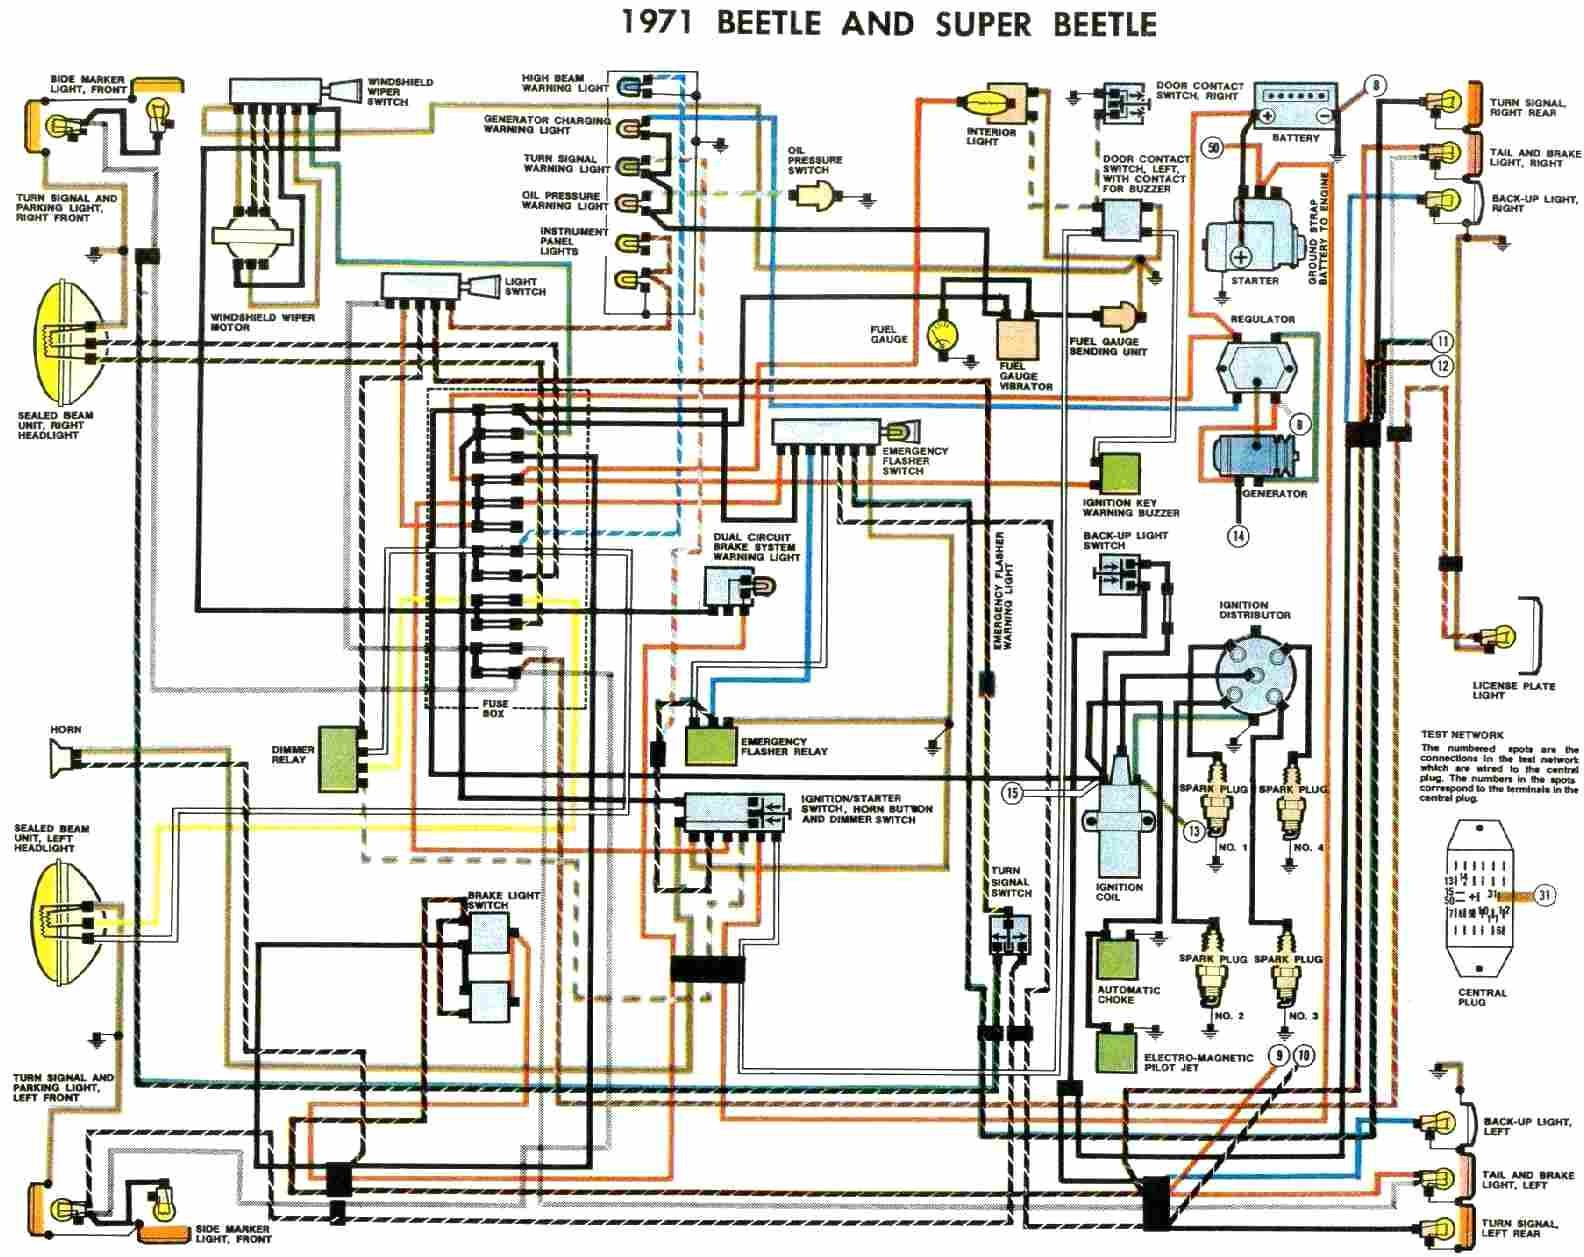 2003 vw passat wiring diagram pdf cc 11 auto images and rh chocaraze org volkswagen beetle wiring diagram pdf vw passat wiring diagram pdf